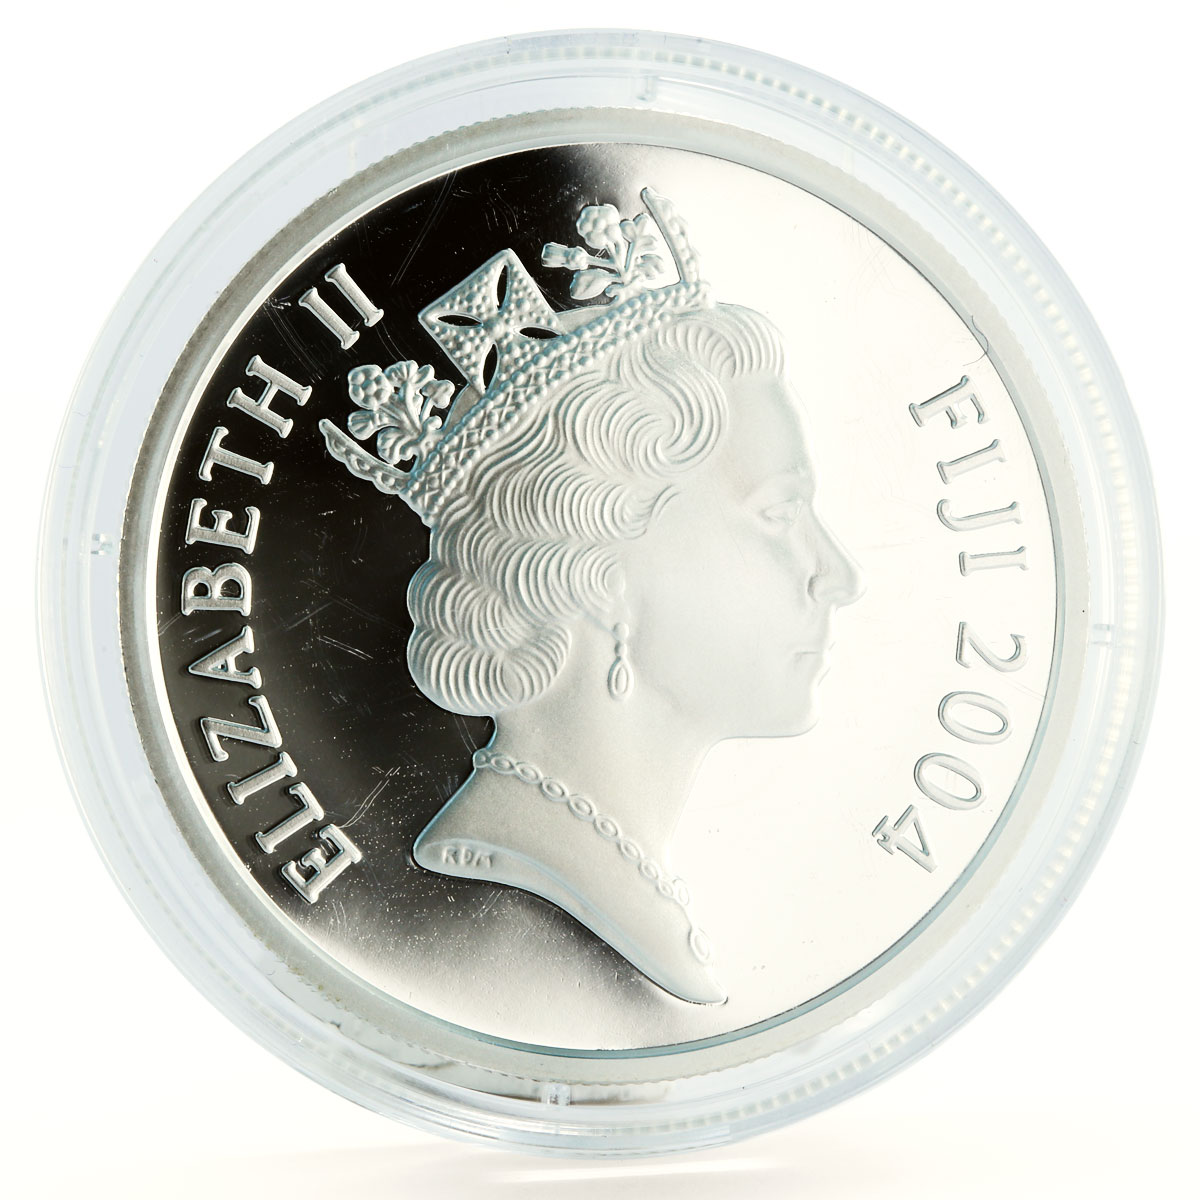 Fiji 10 dollars Falcon Sir Walter Raleigh Sailing Ship proof silver coin 2004